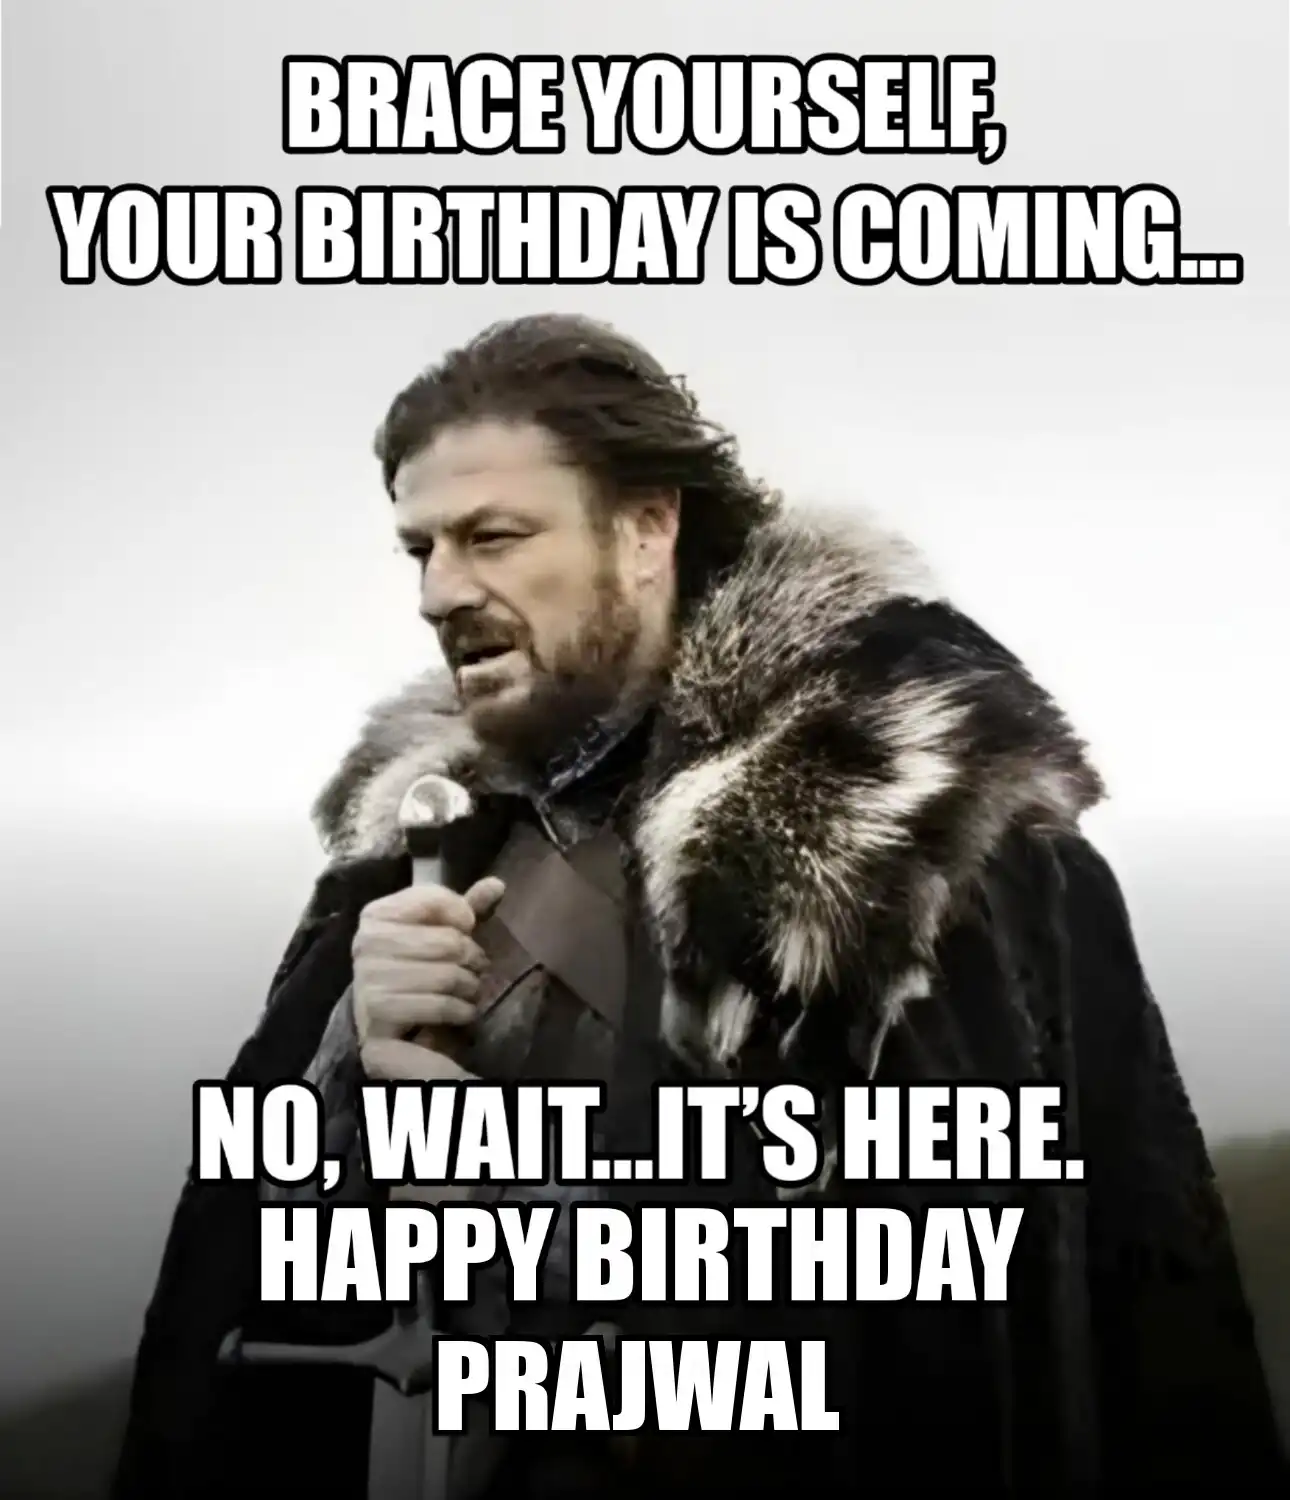 Happy Birthday Prajwal Brace Yourself Your Birthday Is Coming Meme